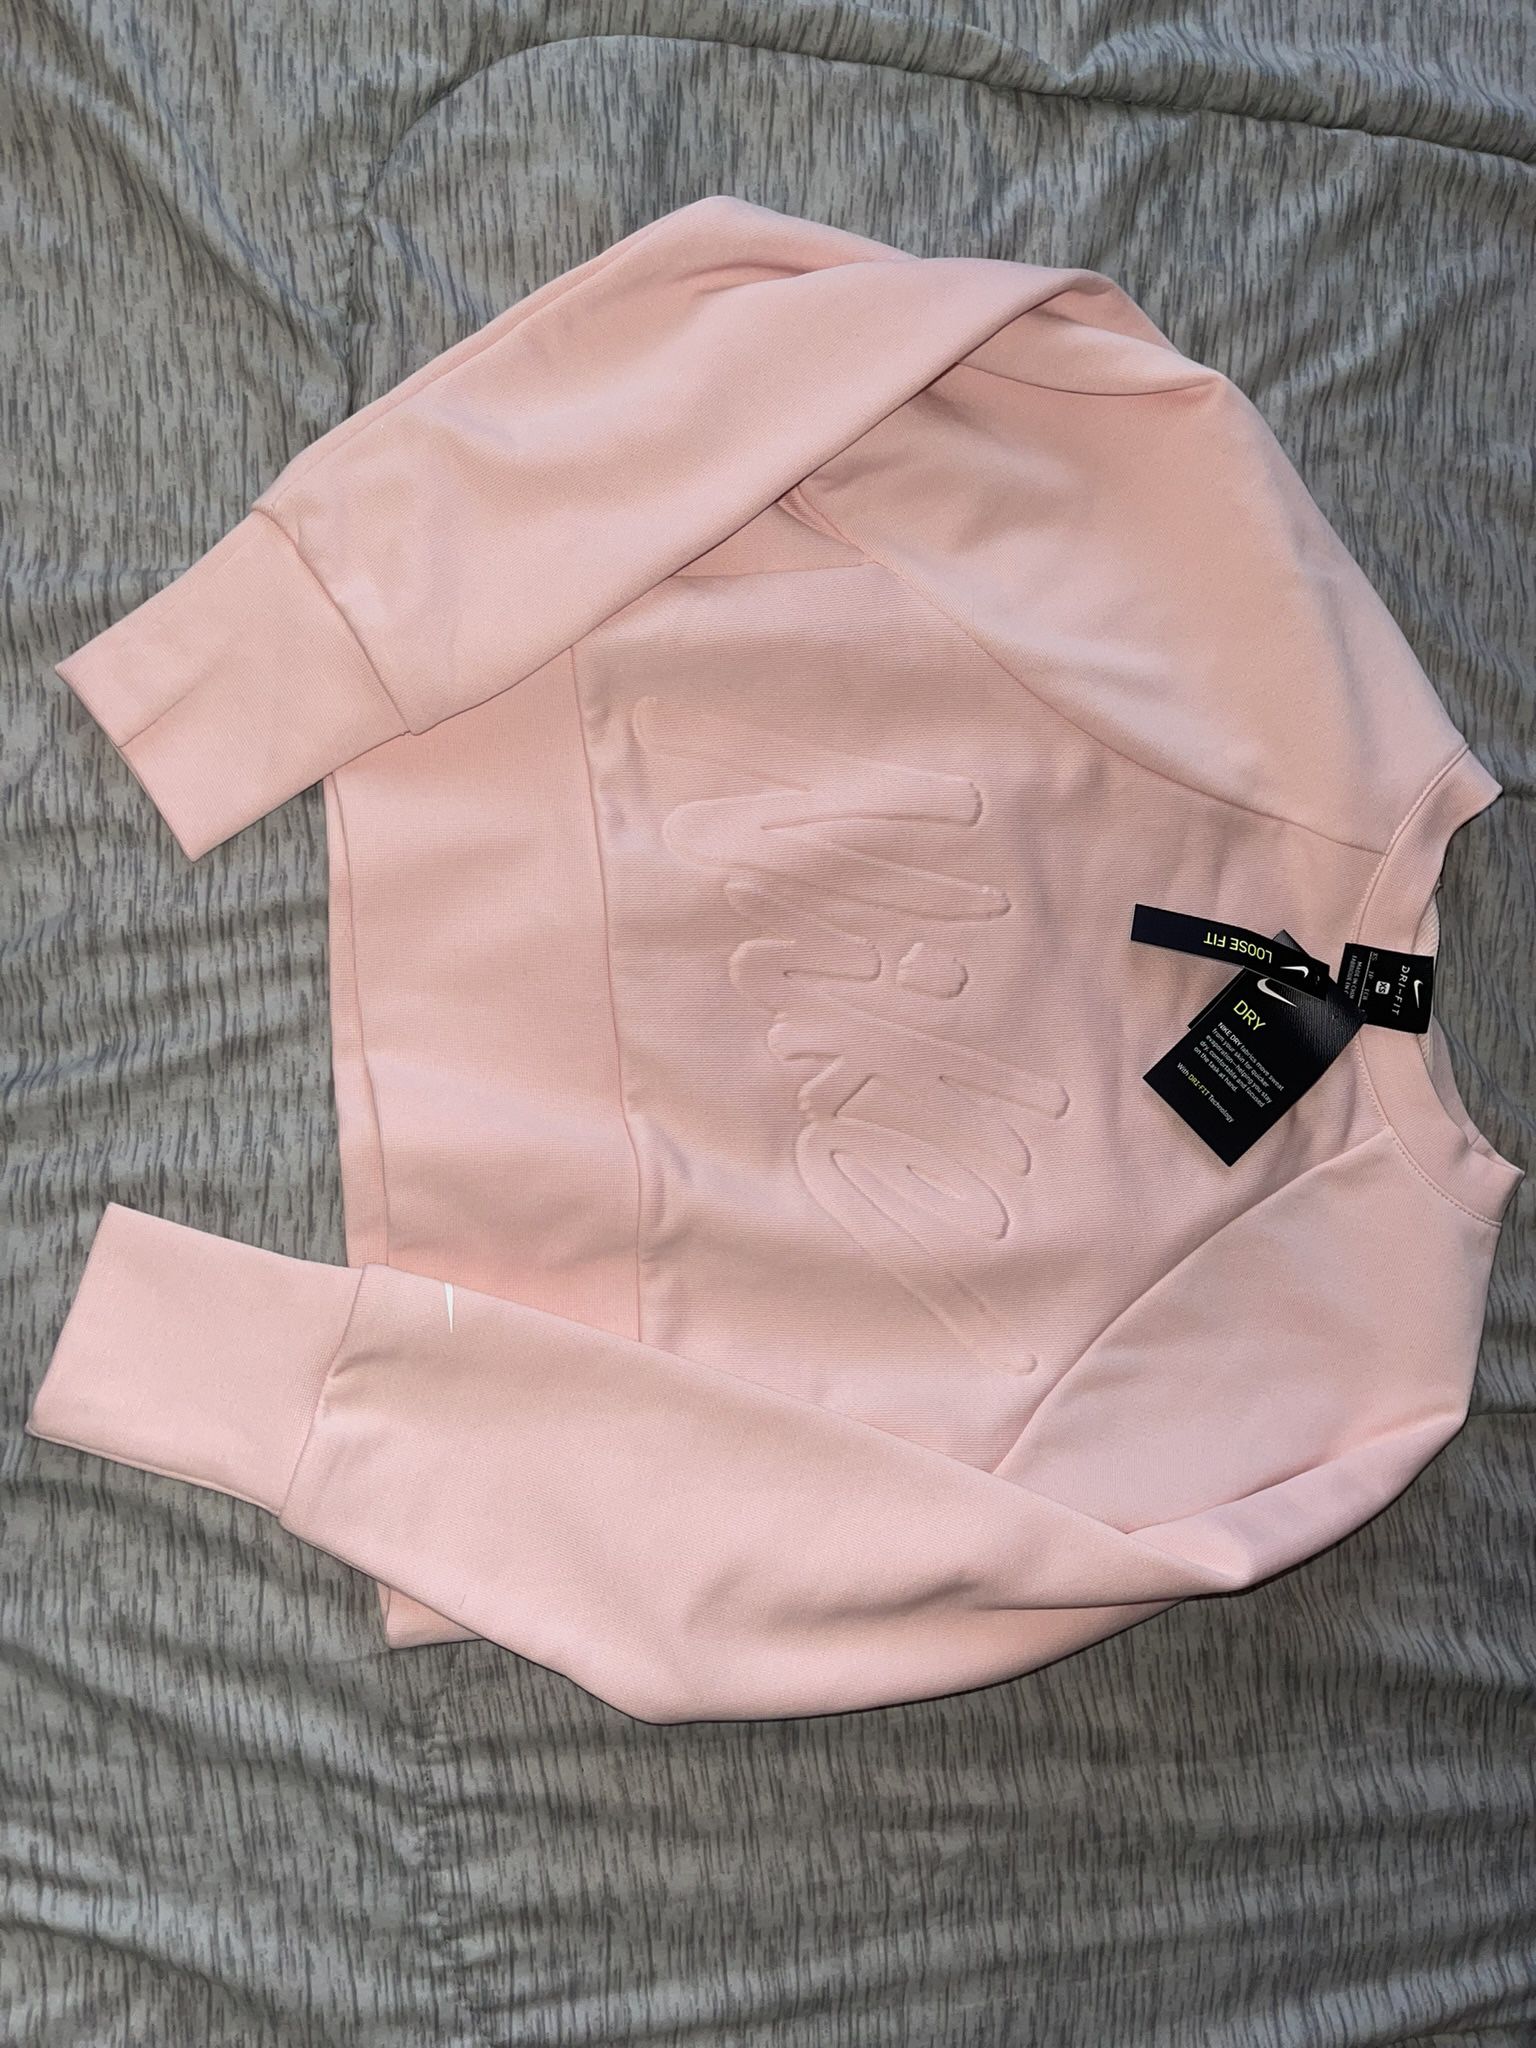 NWT pink Nike sweatshirt